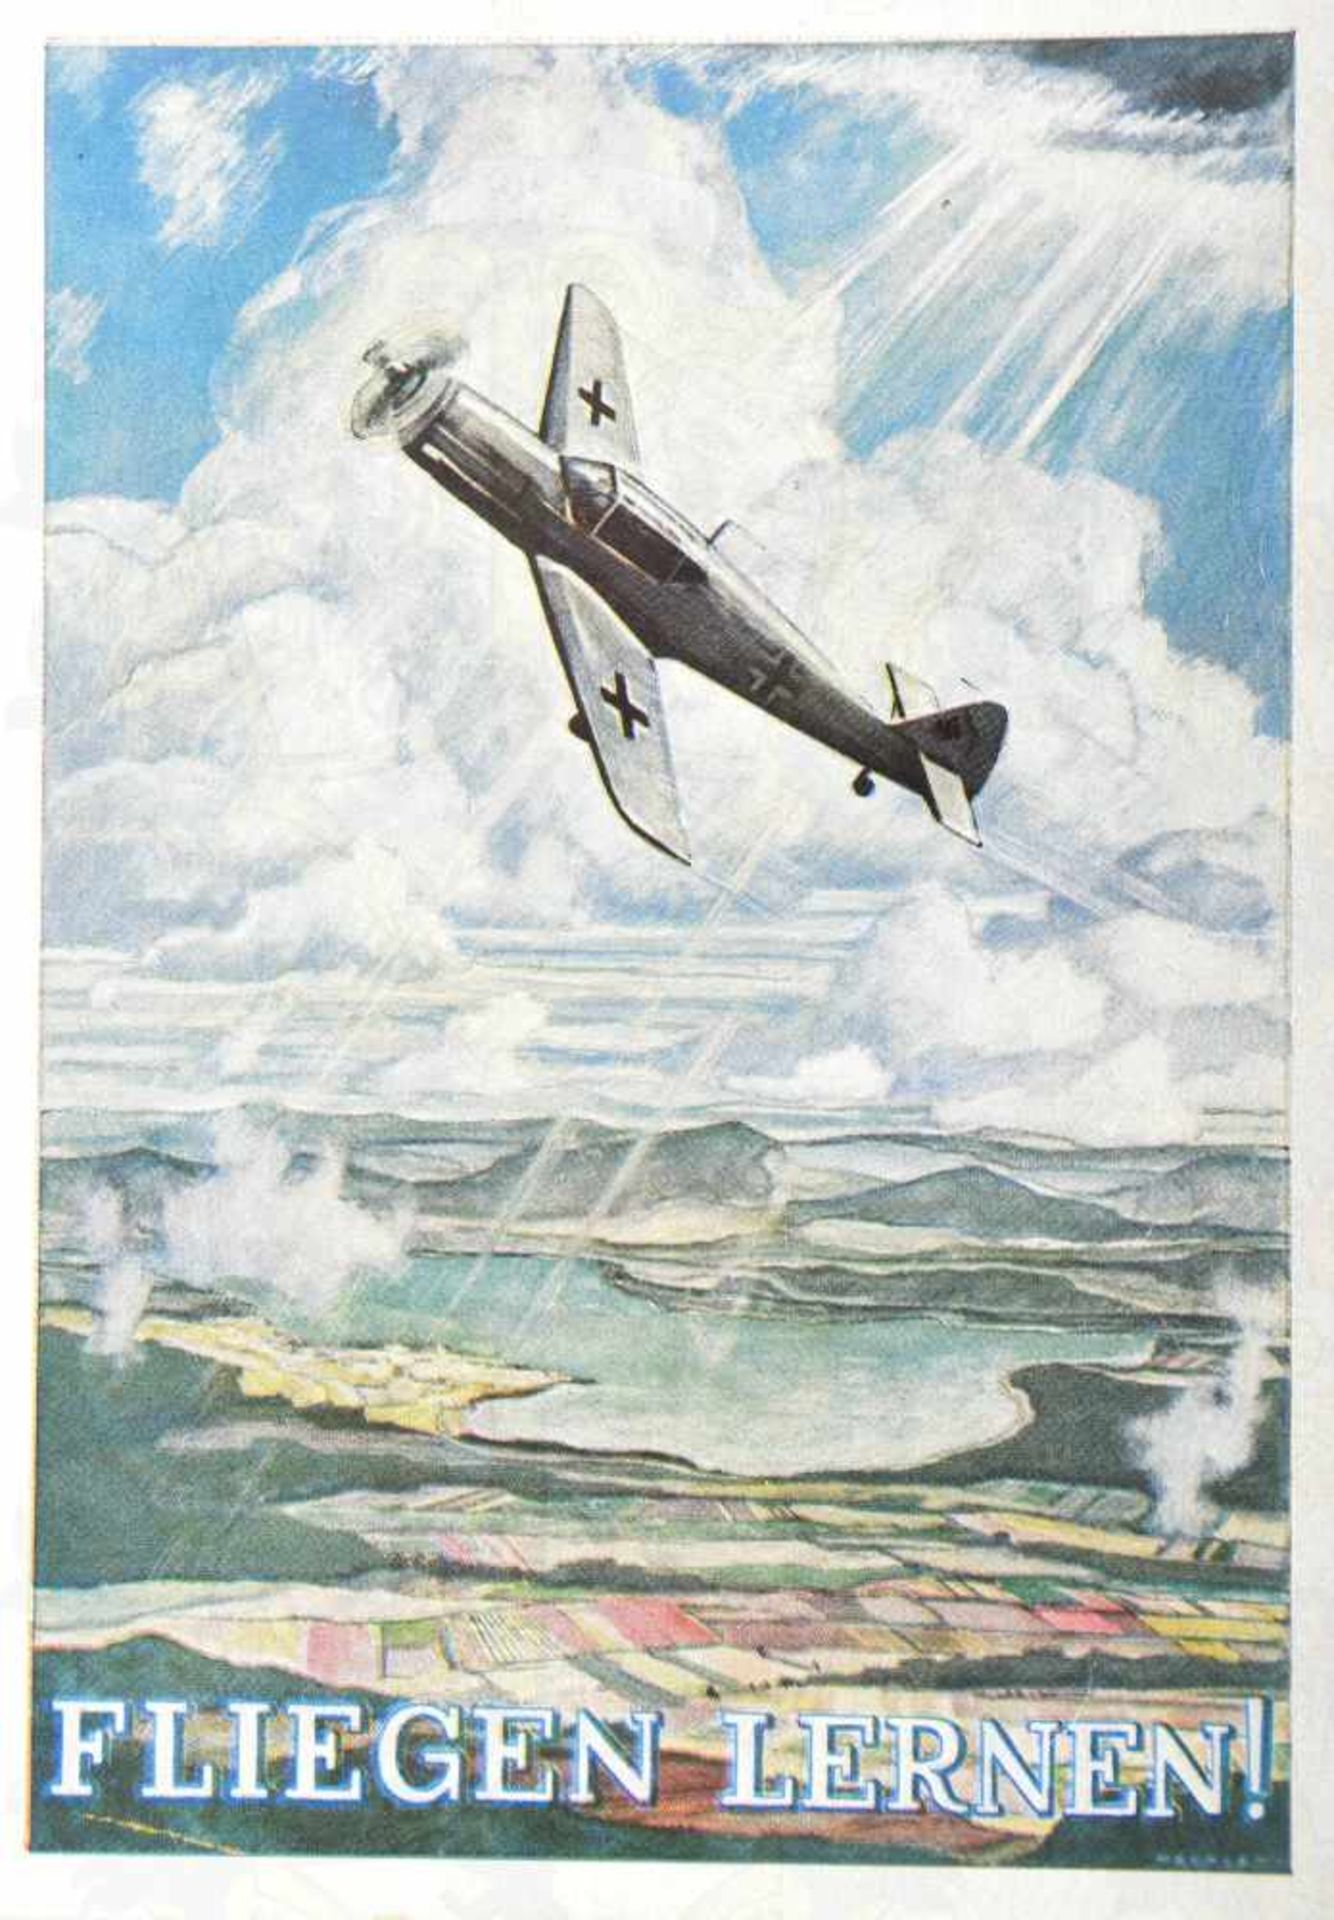 PROPAGANDAKARTE FLIEGEN LERNEN!, farb., herausg. v. NSFK-Korpsführung, ungel., um 1940